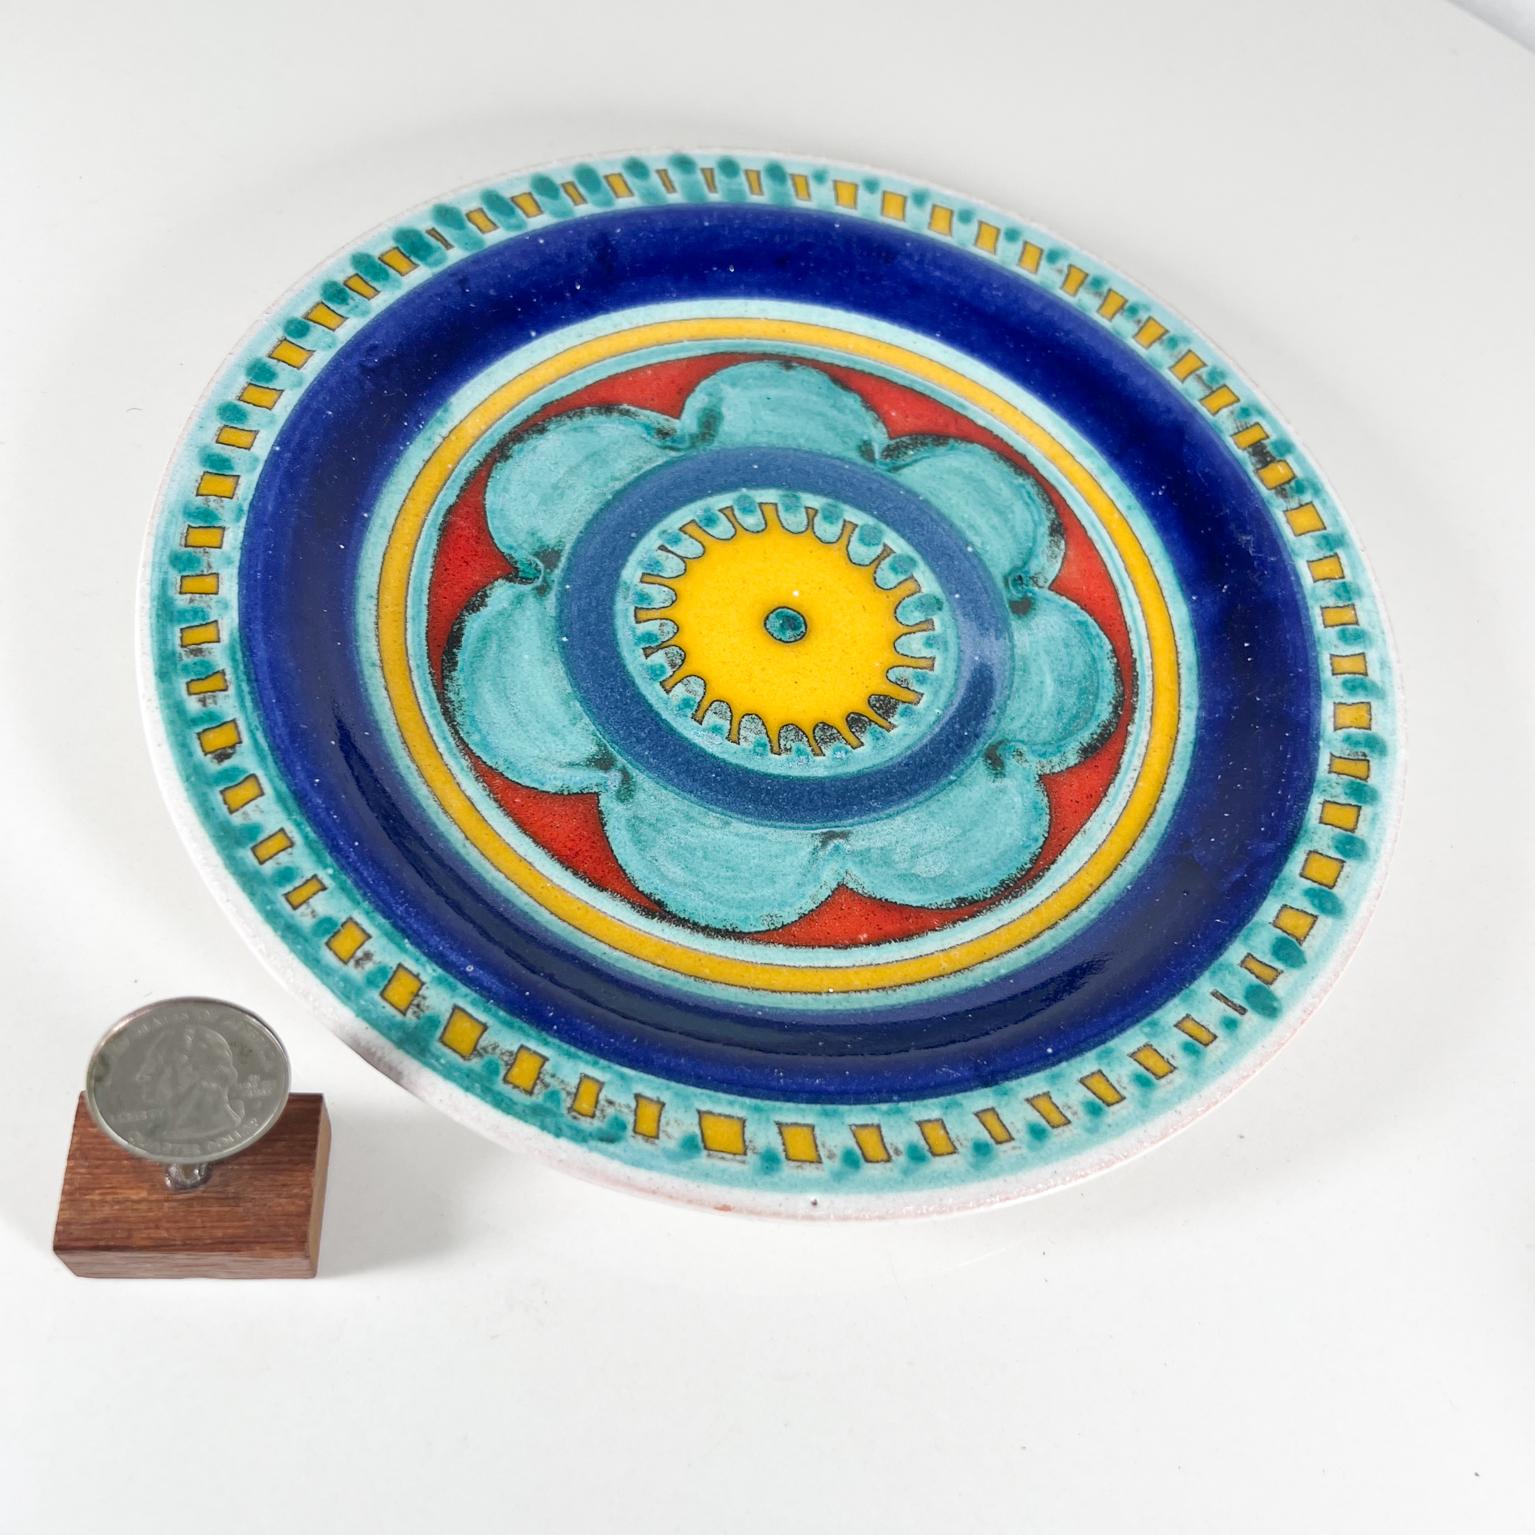 DeSimone-Keramik, Italien, Keramik-Kunstteller, handbemalte türkisfarbene Blume, 1960er Jahre  (Italienisch)